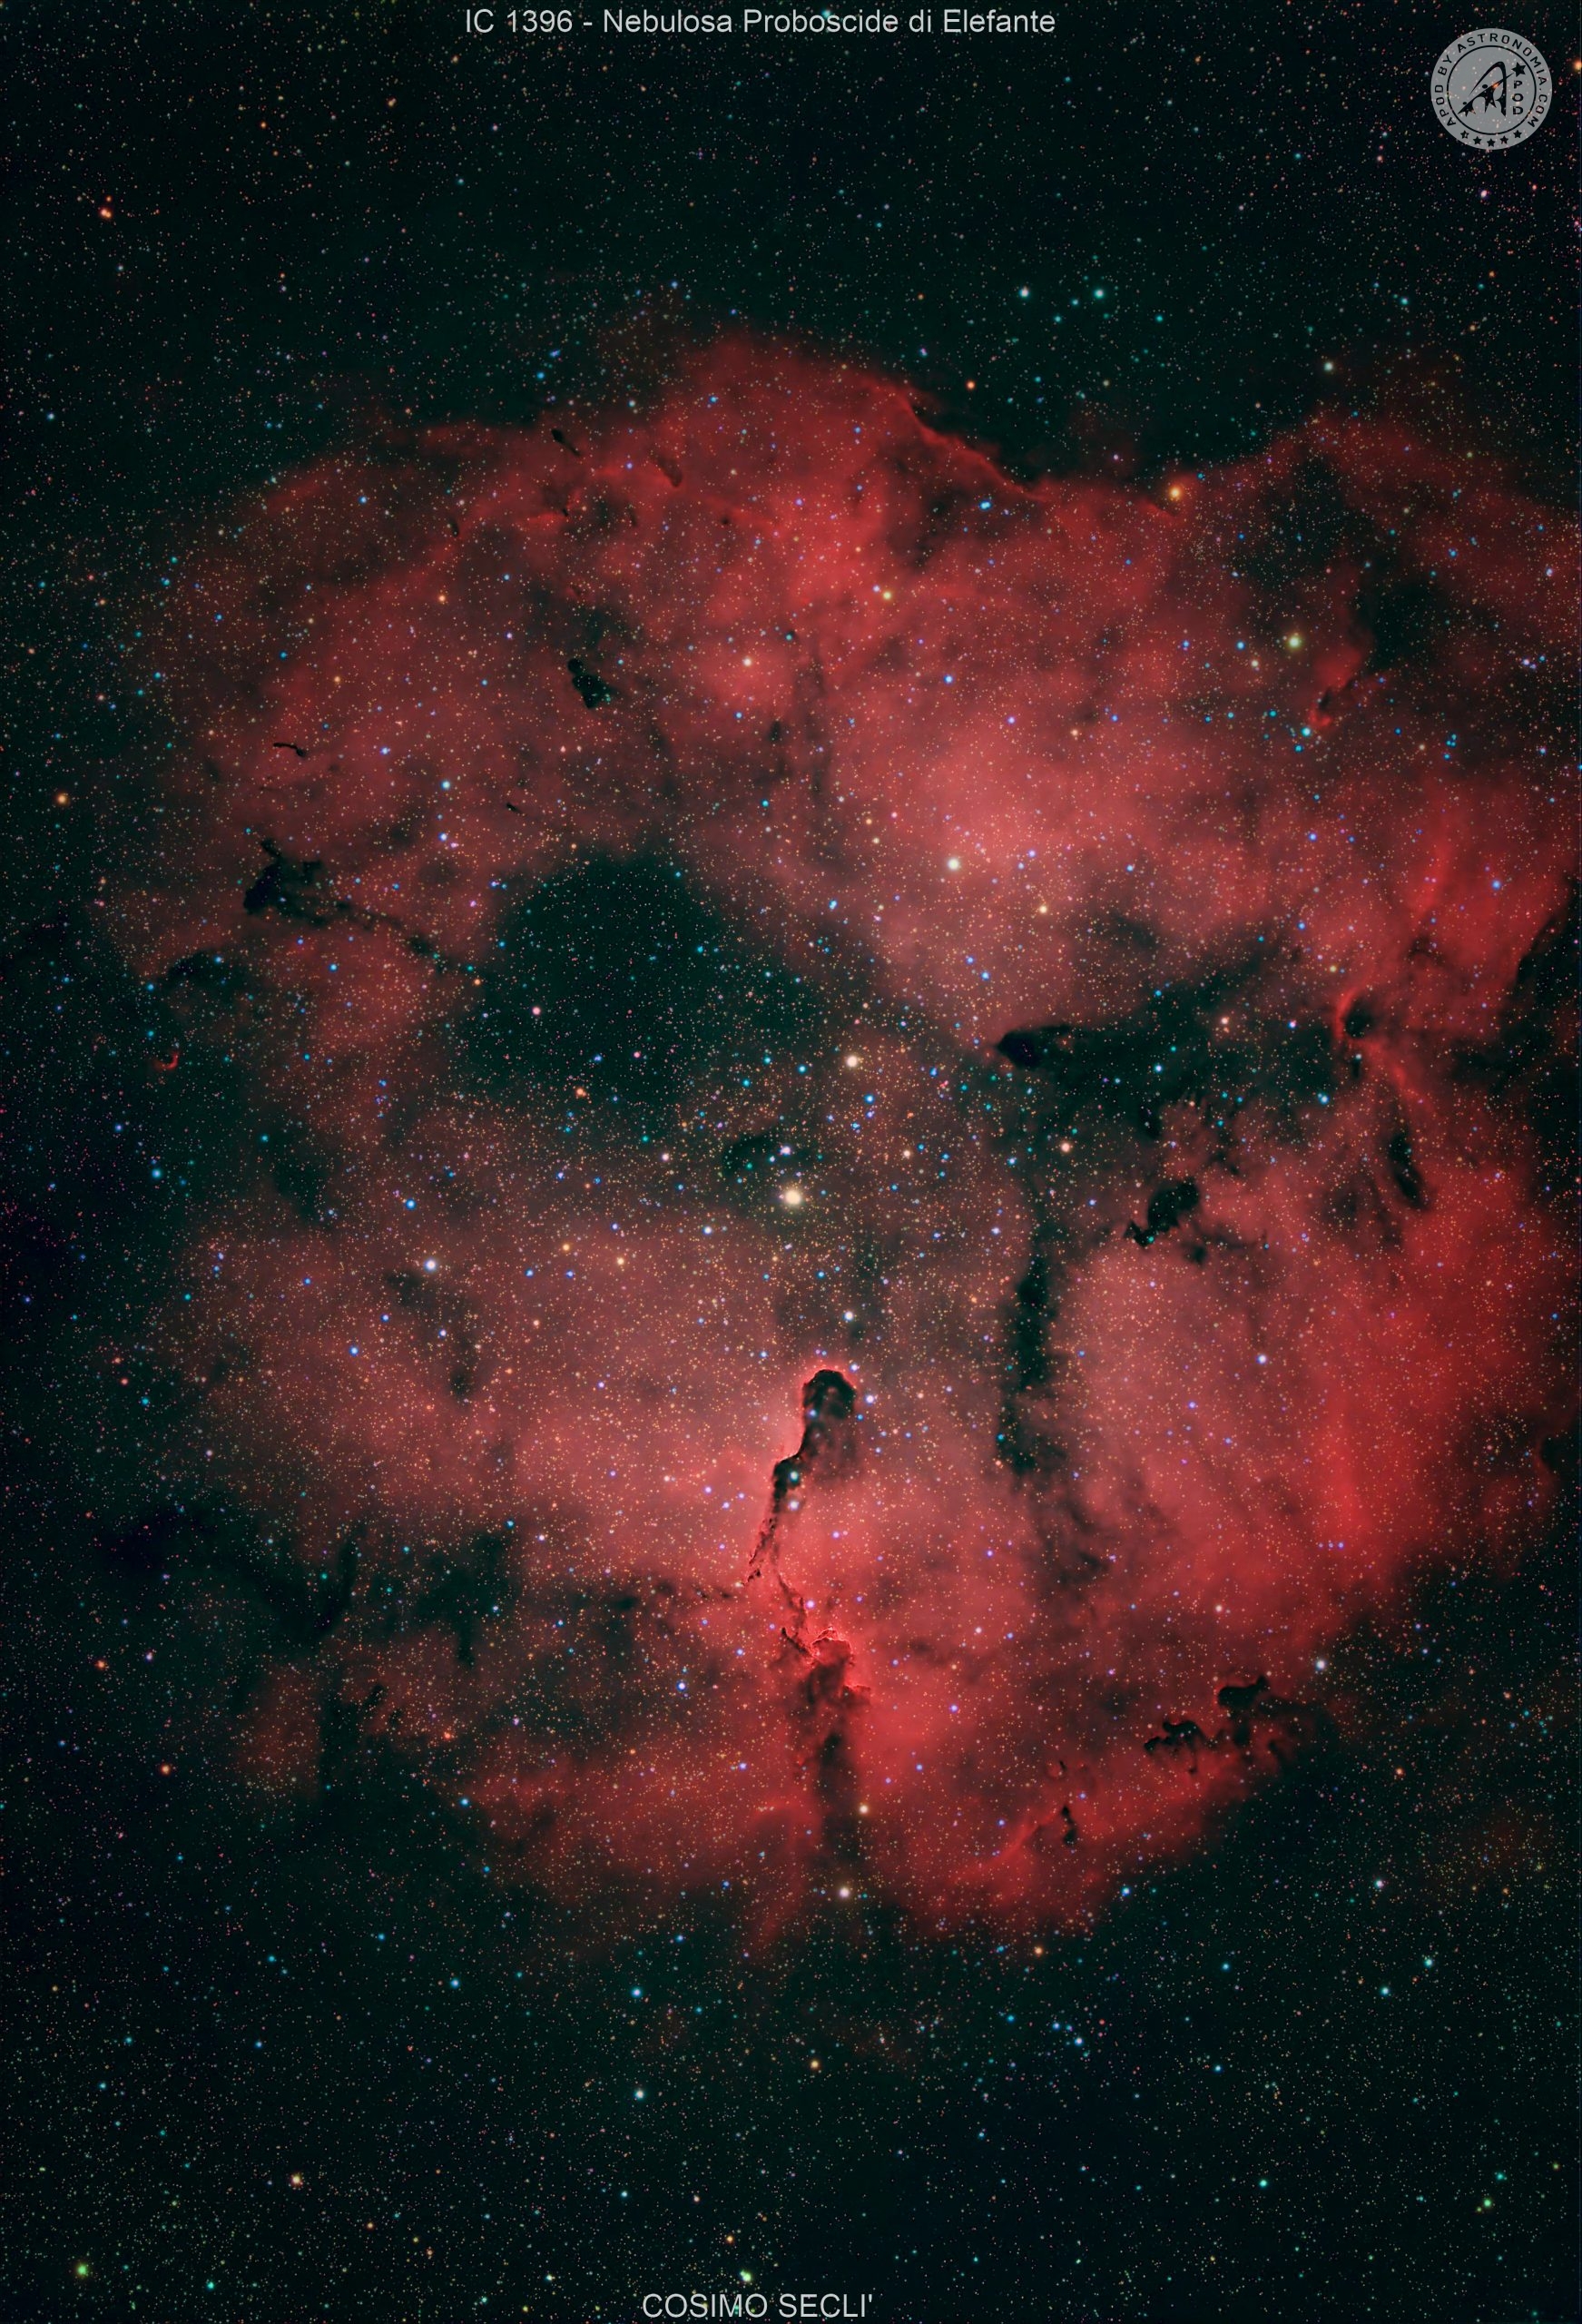 Nebulosa Proboscide di Elefante - IC1396